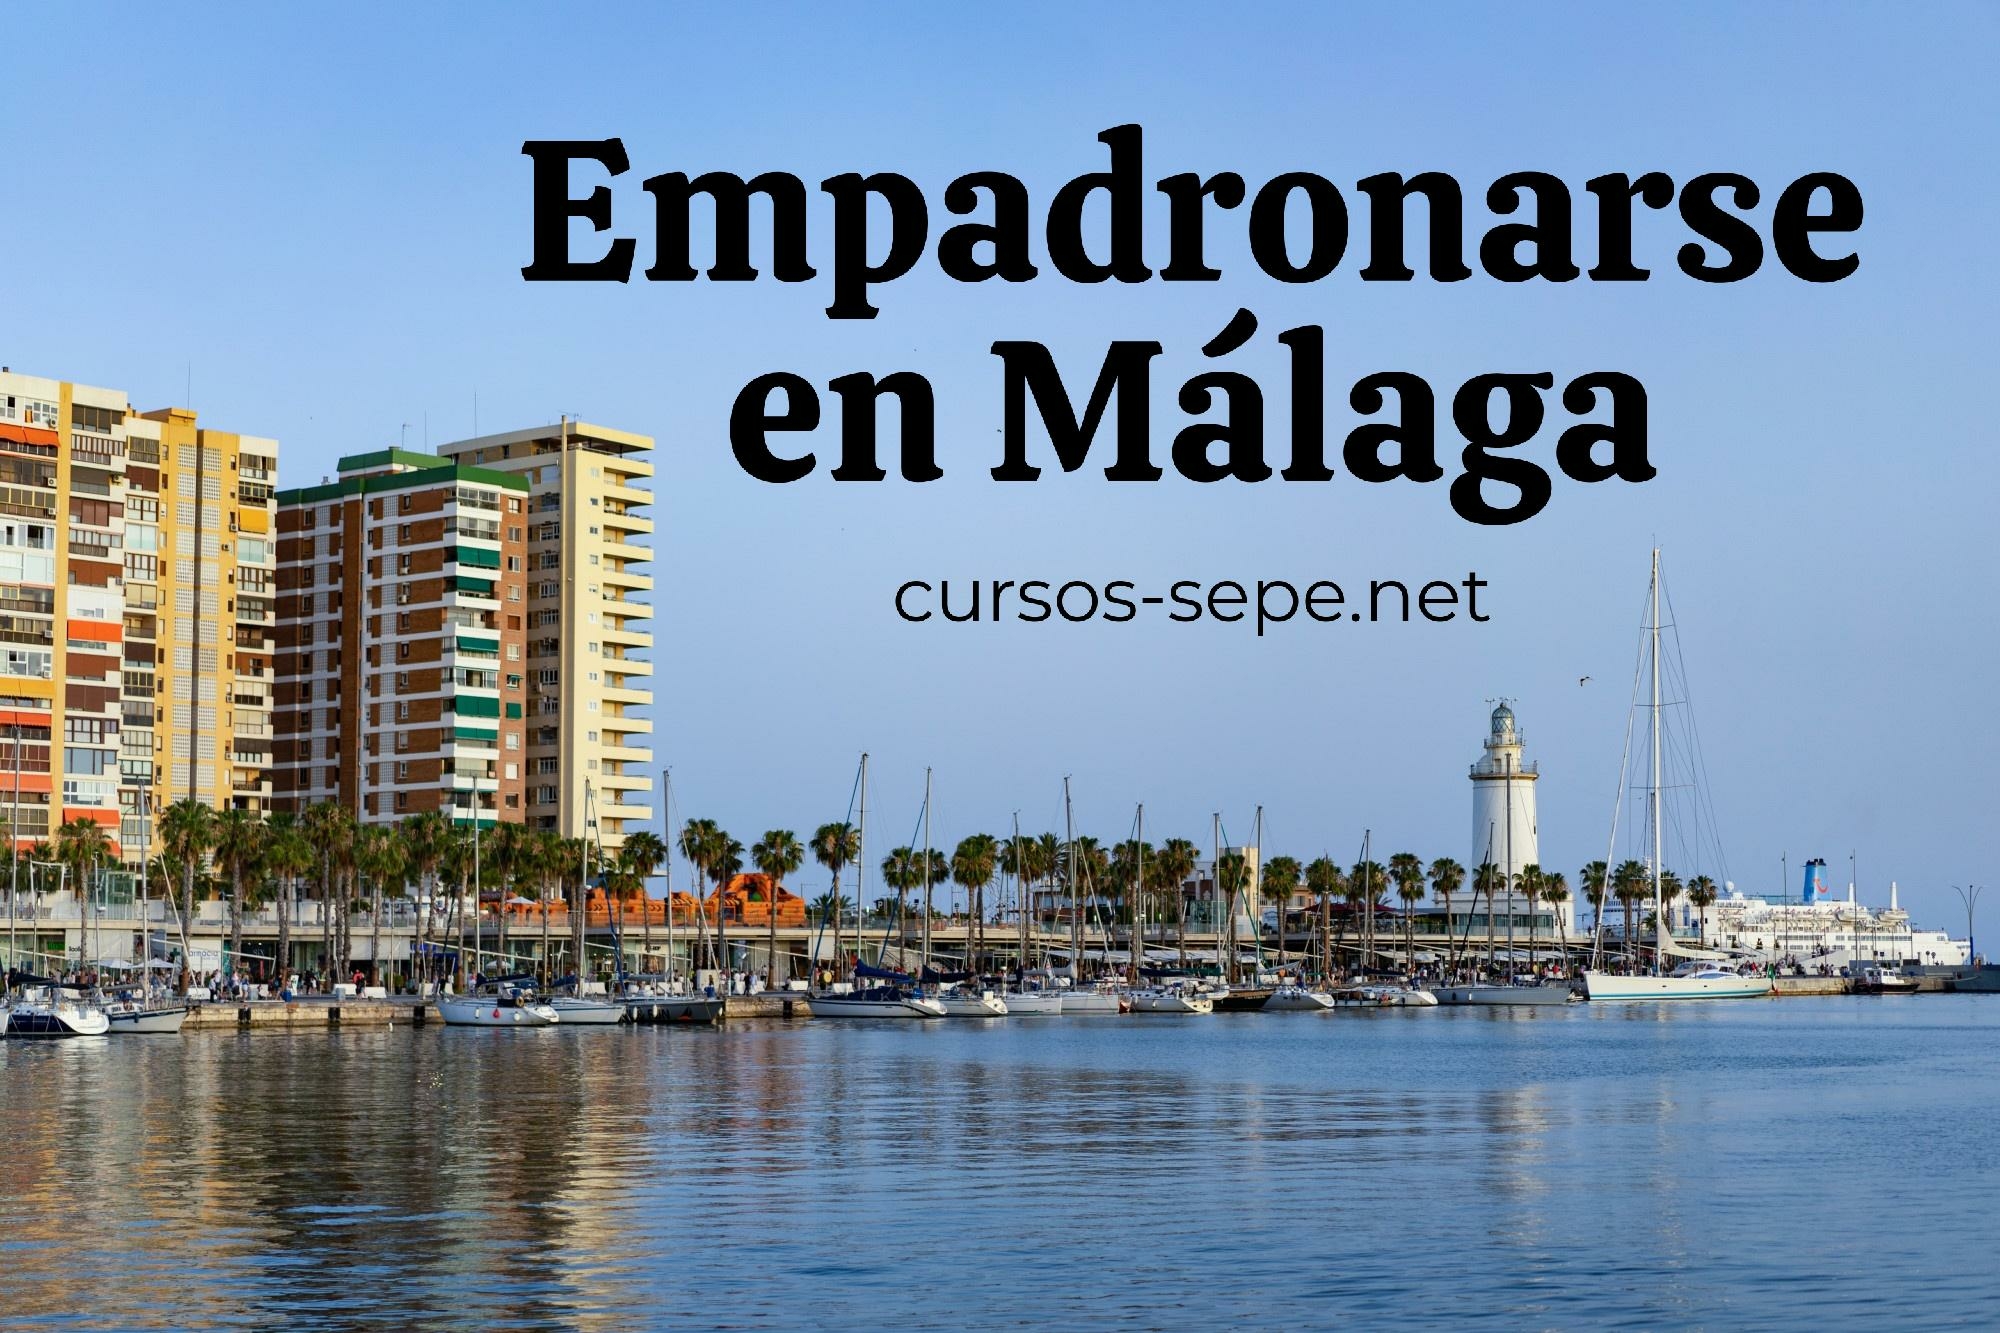 absceso cicatriz profesor ▷ Cómo empadronarse en Málaga: Guía completa actualizada a 2023